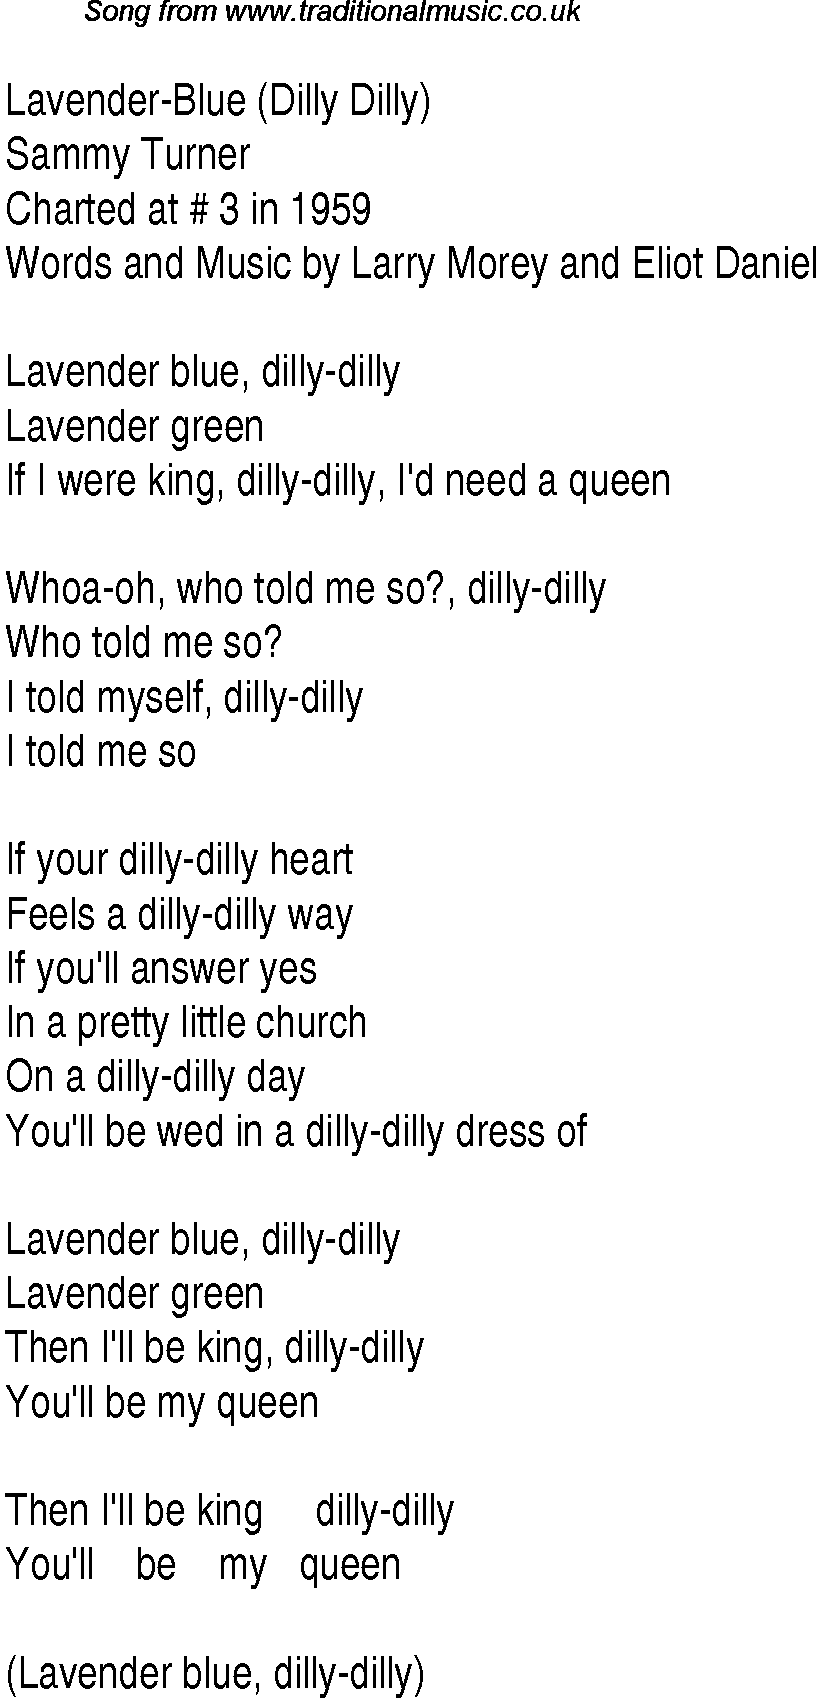 Lavender blue dilly dilly song cinderella lyrics